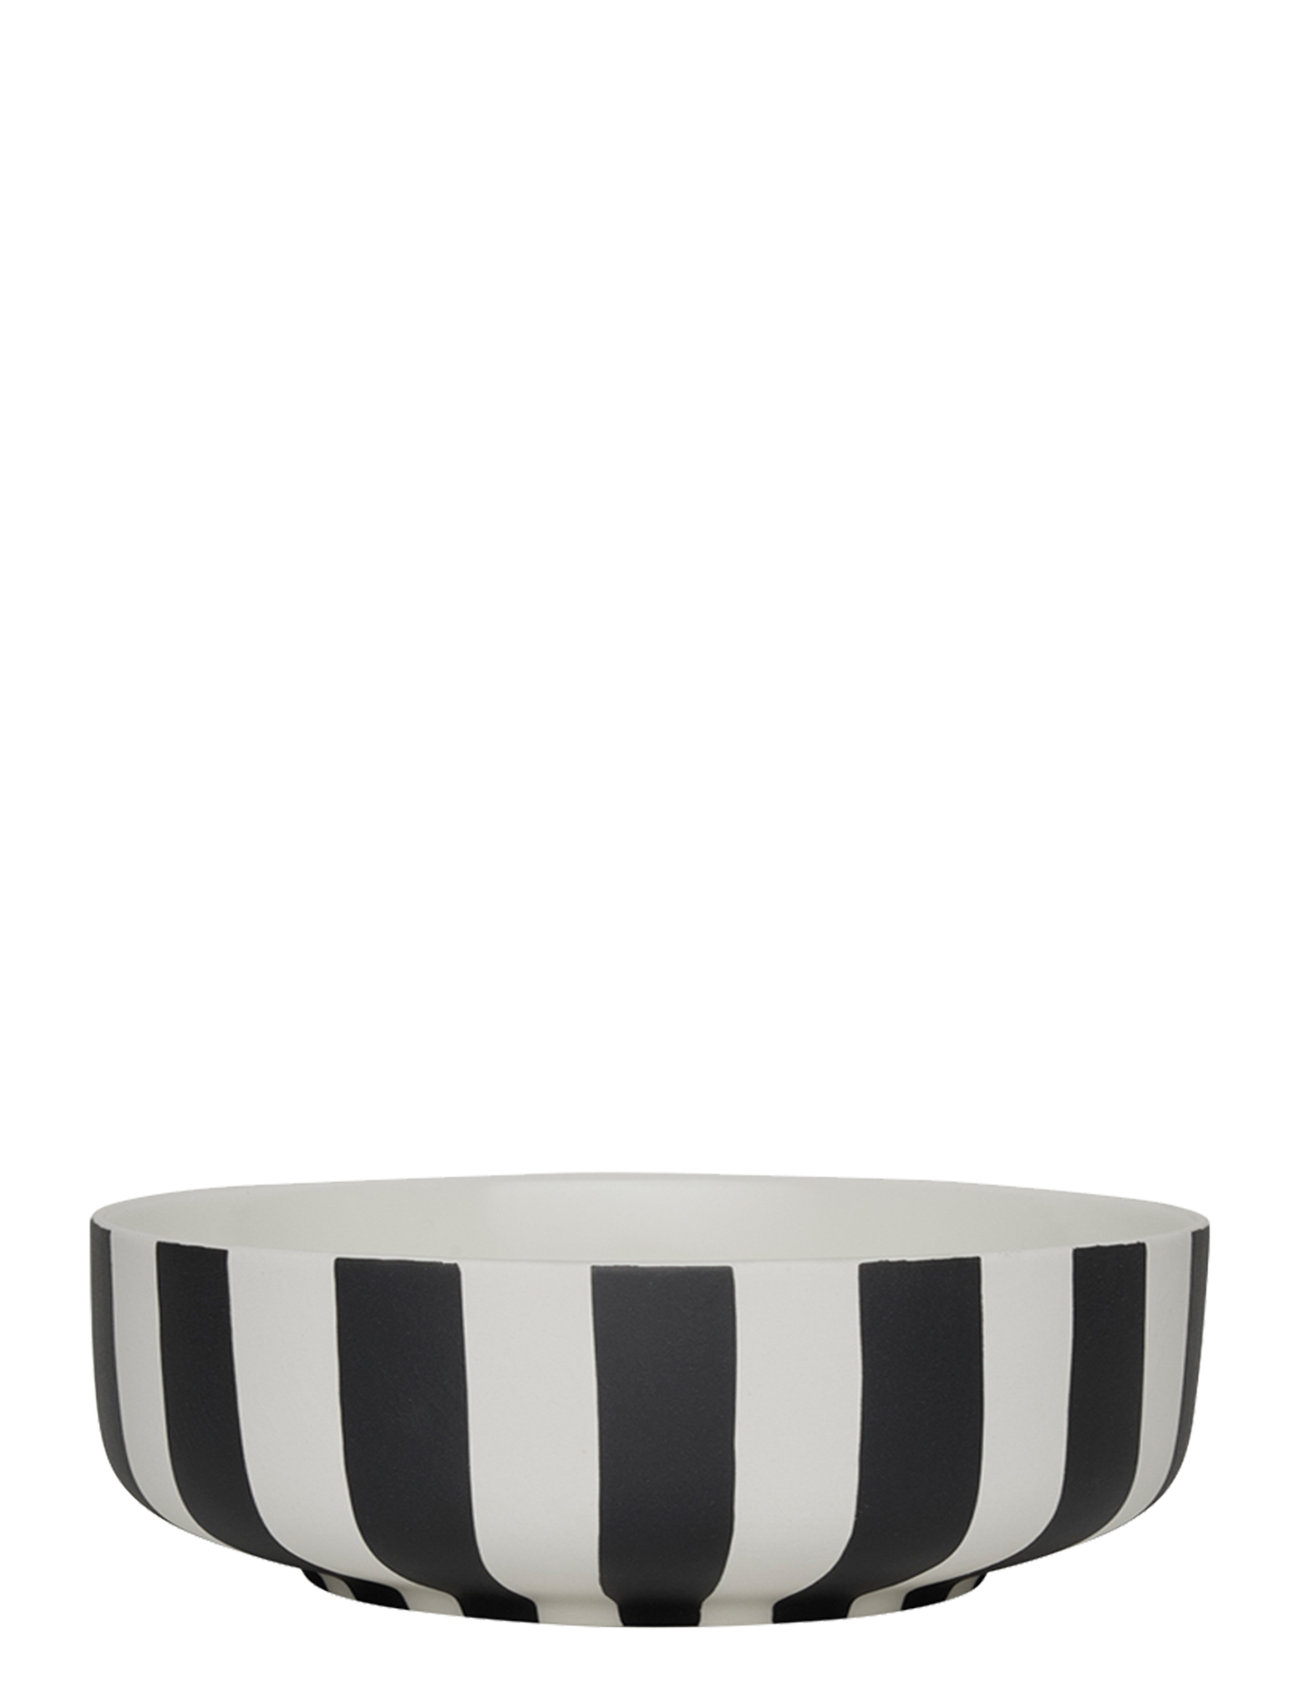 Toppu Bowl - Large Home Tableware Bowls & Serving Dishes Serving Bowls Black OYOY Living Design